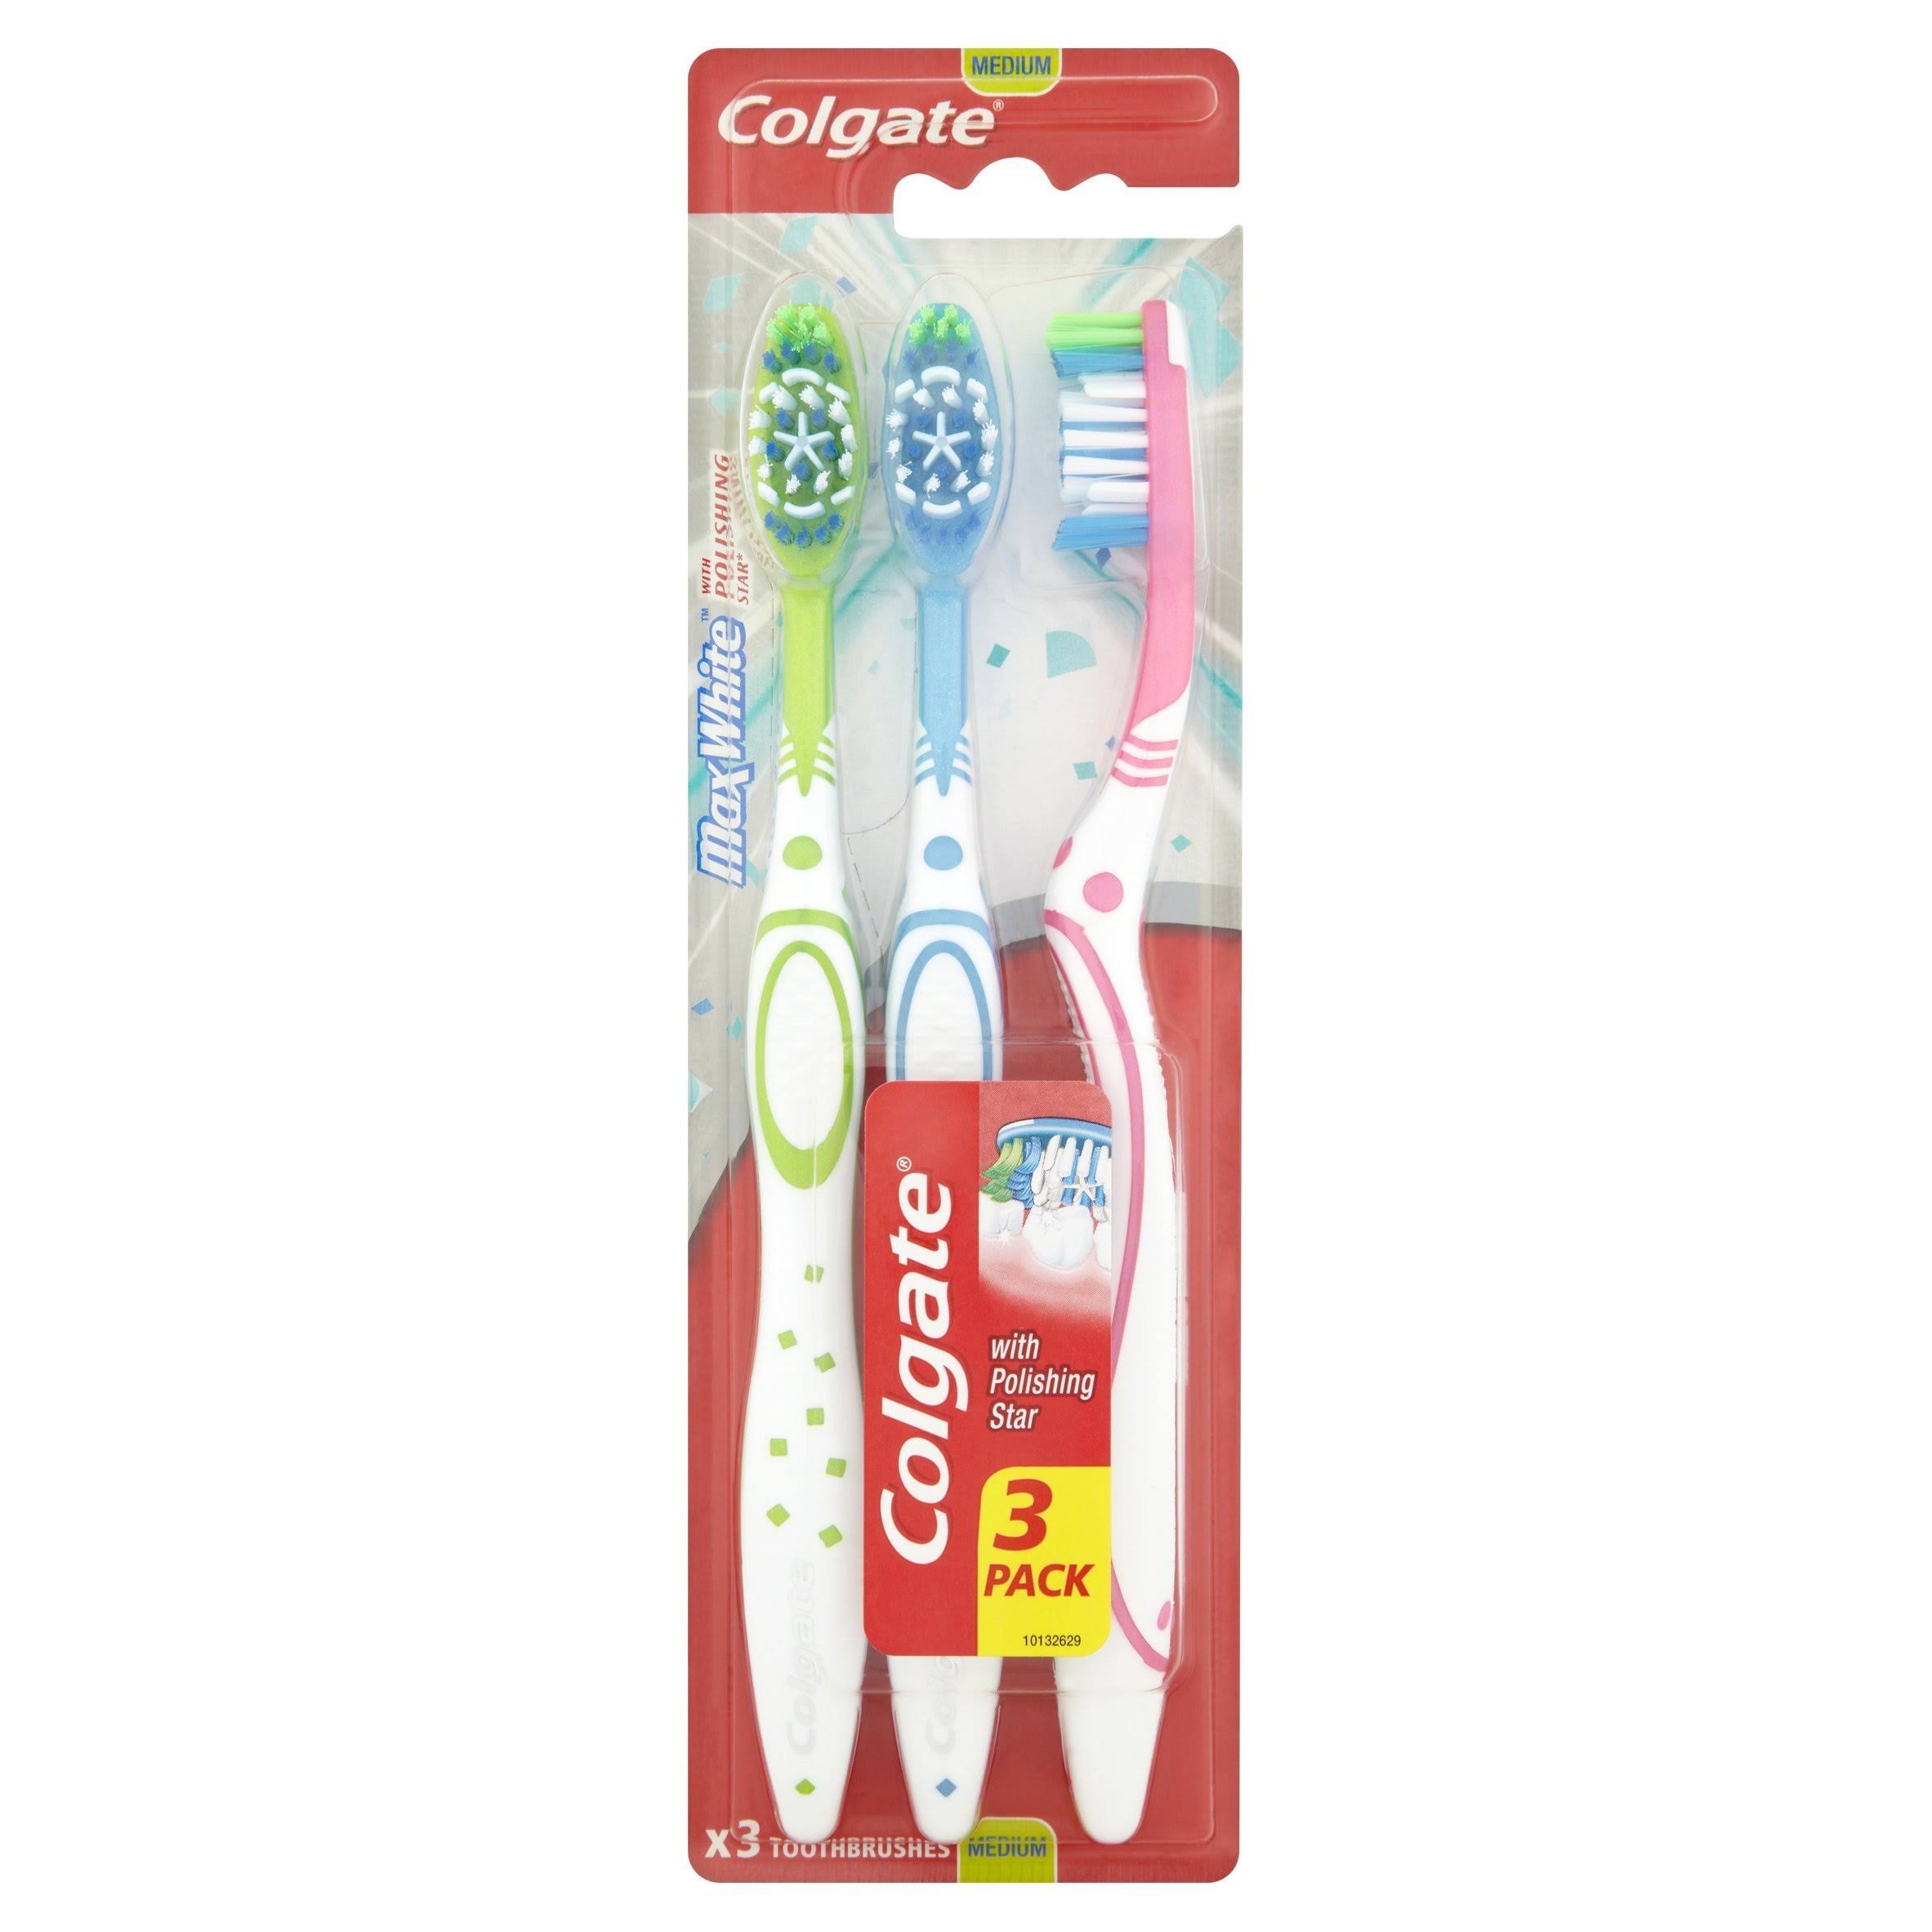 Colgate Max White Toothbrush, Triple Pack (Medium)